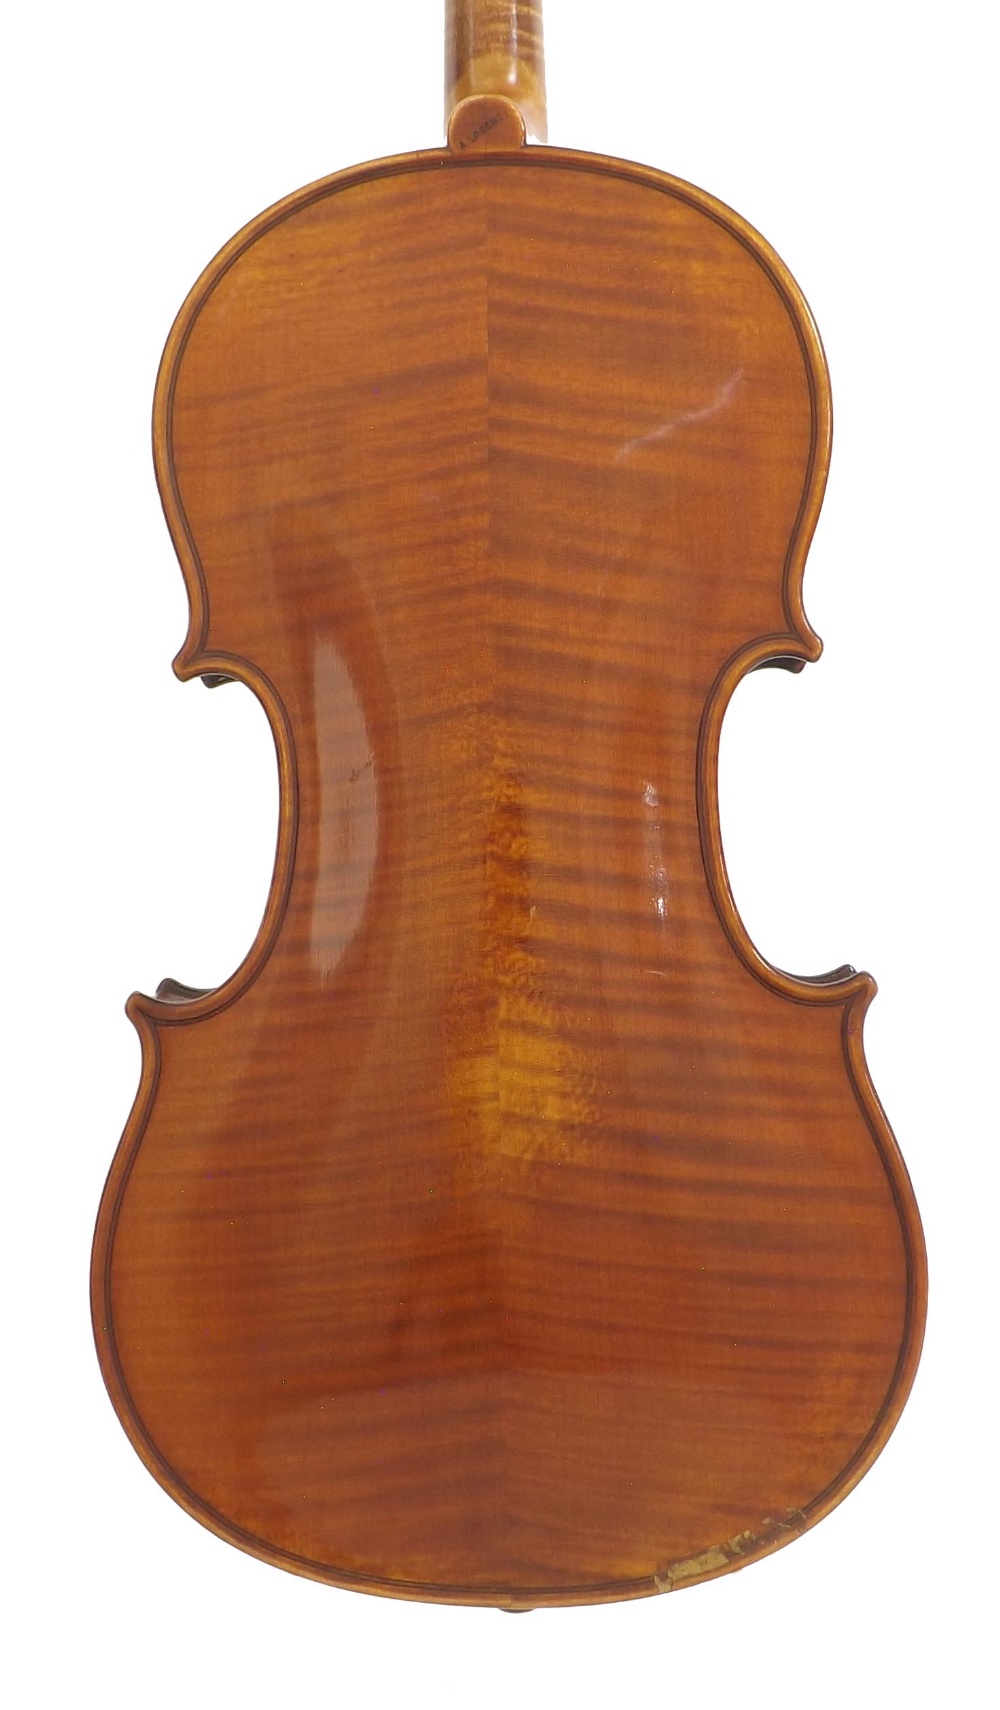 French violin by and labelled Antonio Lorenzi, Di San Raffaelo, no. 3125, also signed on the label - Image 2 of 3